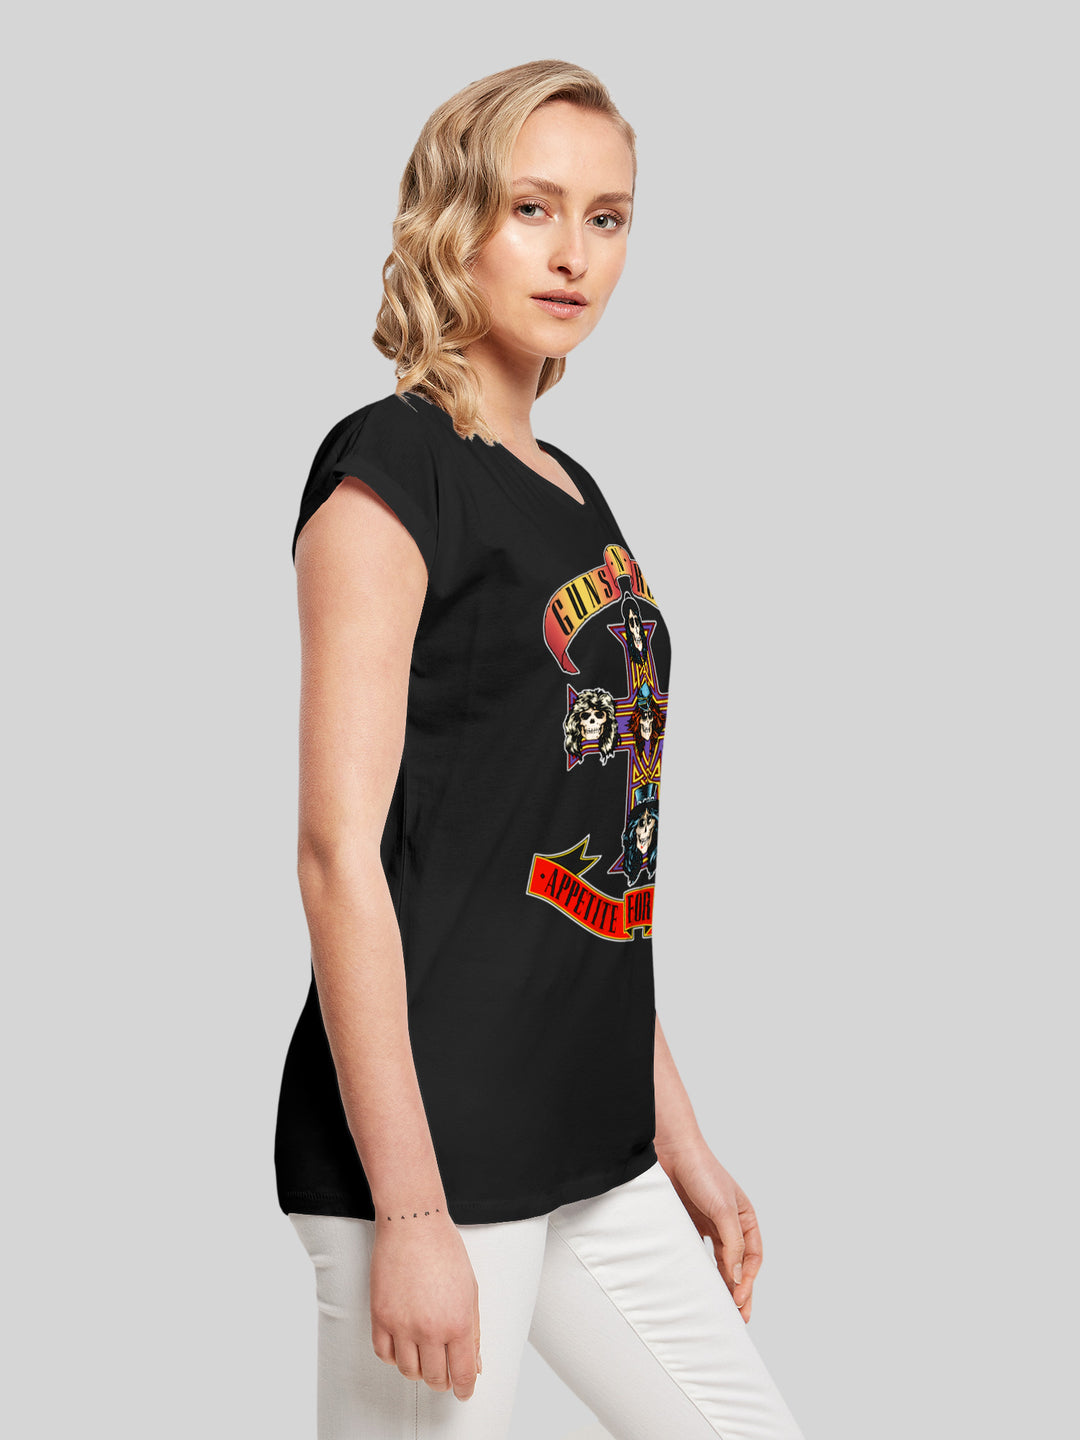 Guns 'n' Roses T-Shirt | Appetite For Destruction | Premium Kurzarm Damen T Shirt